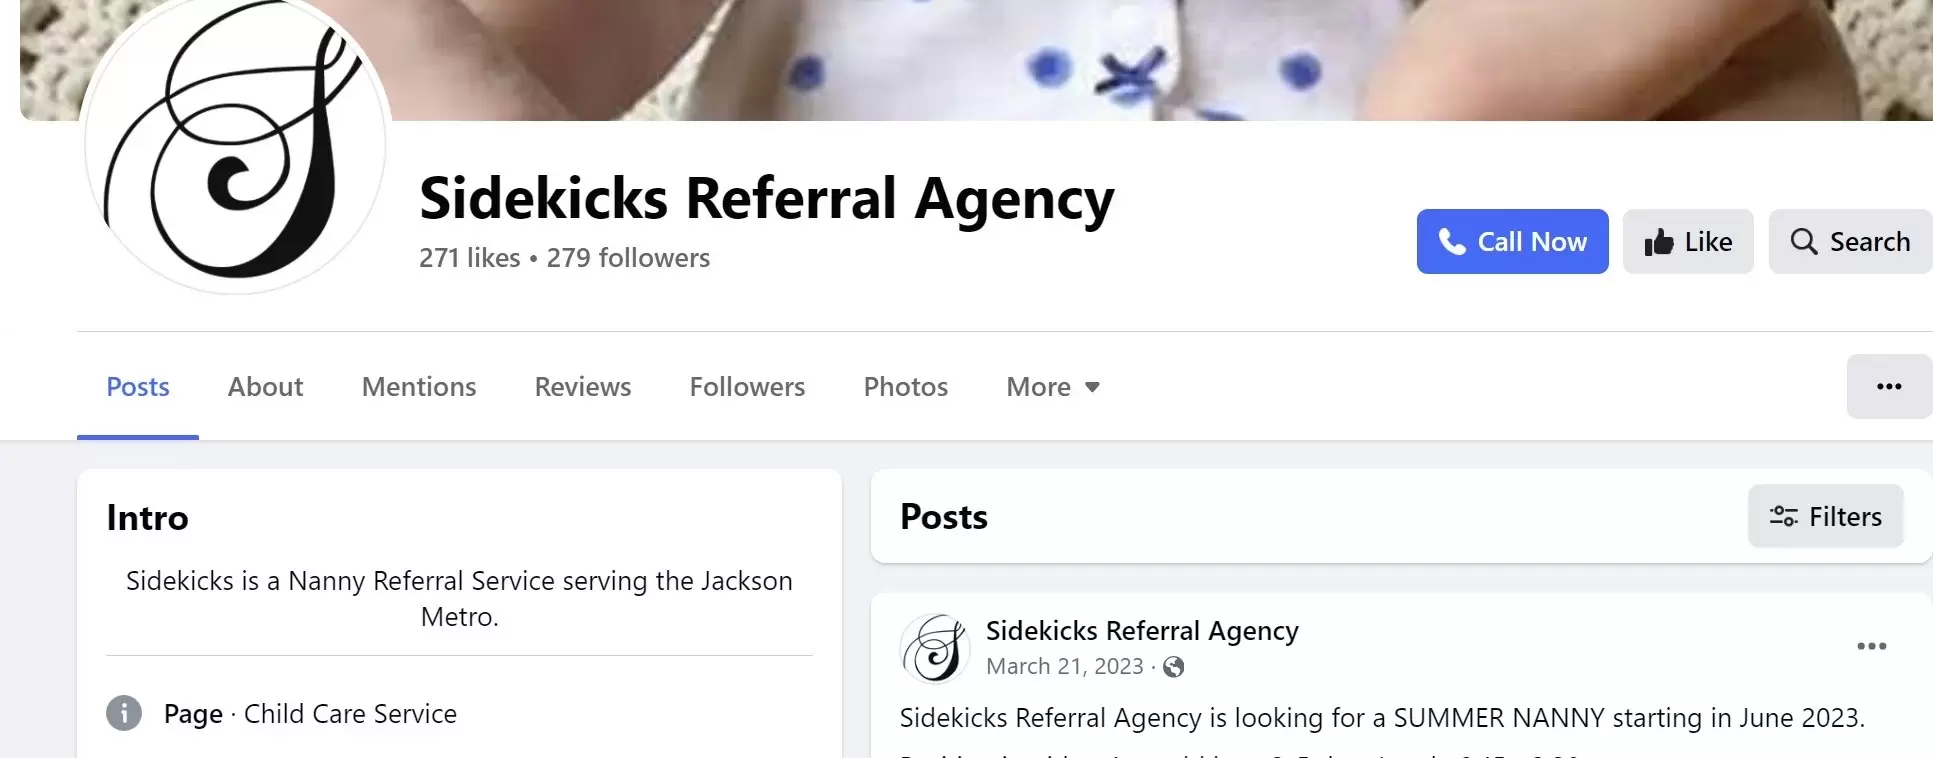 Sidekicks Referral Agency company profile and reviews